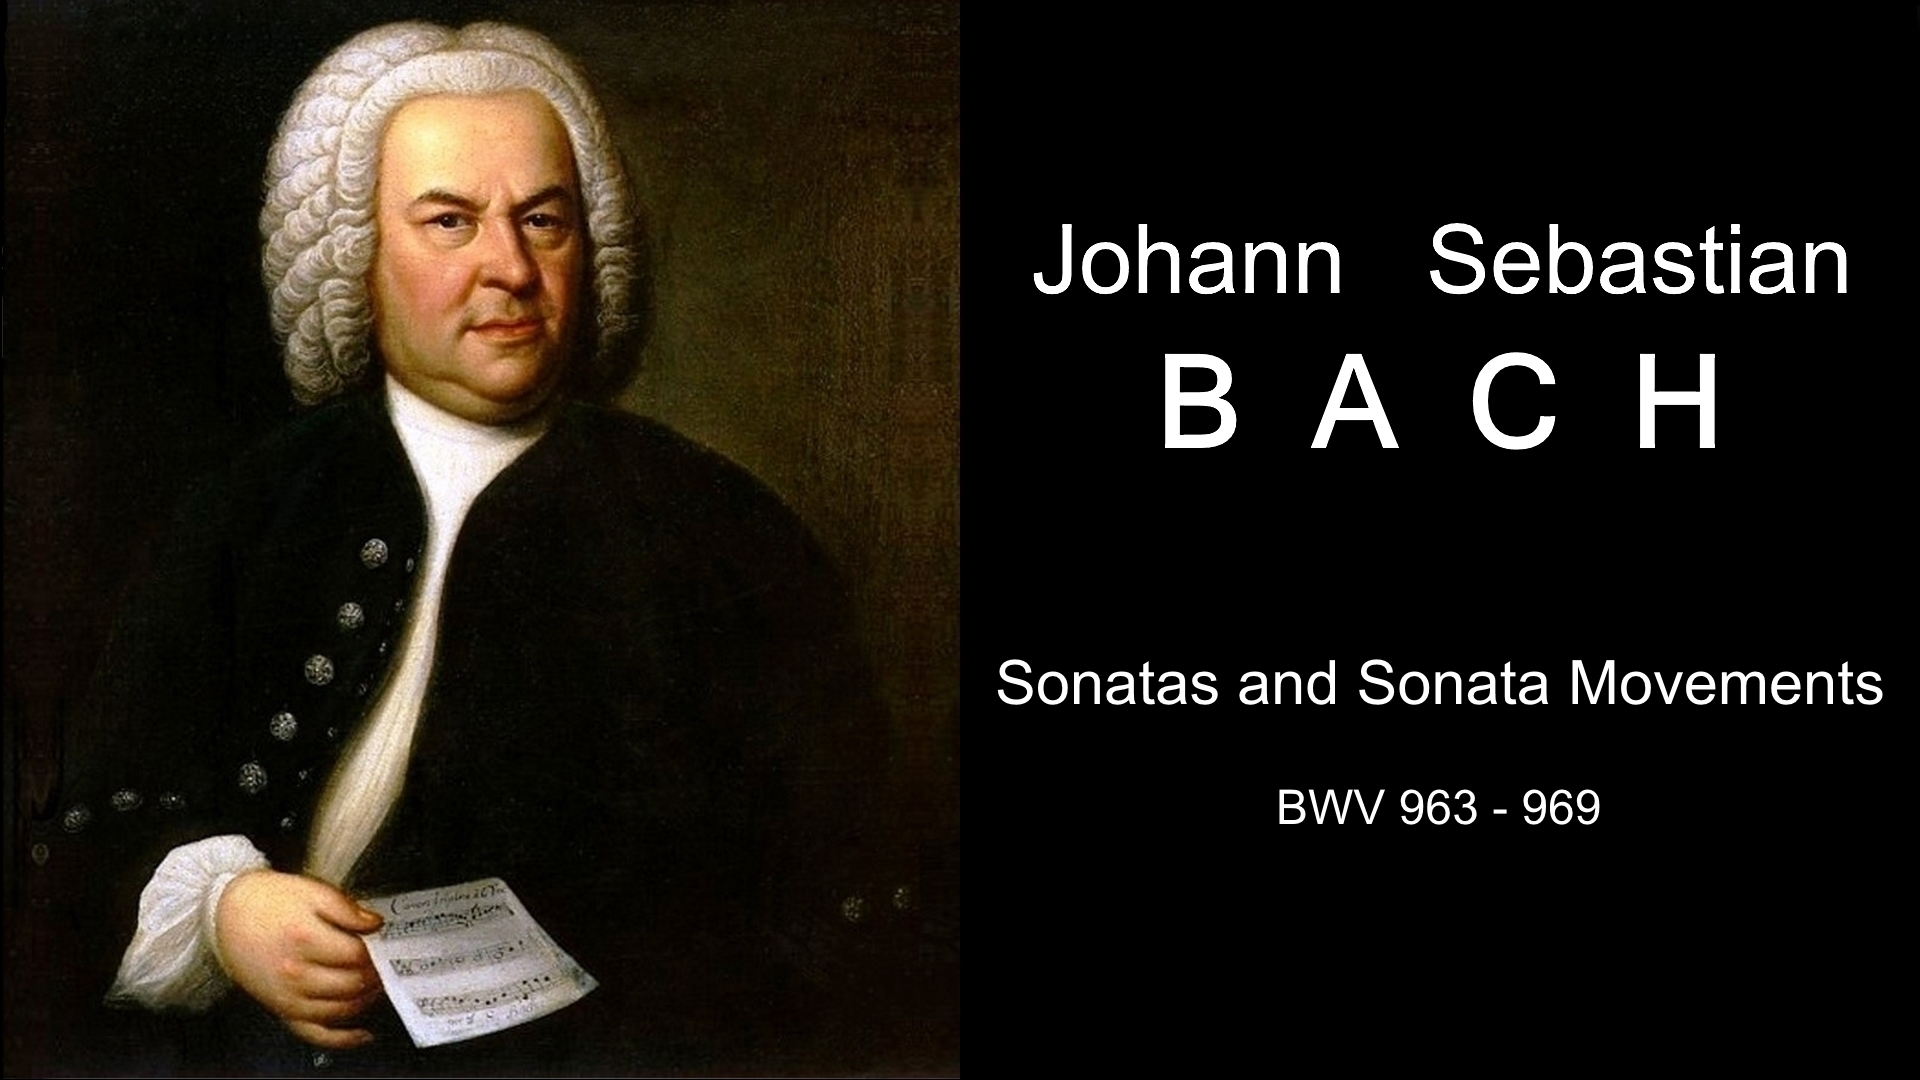 Уроки музыки баха. Иоганн Себастьян Бах. Иоганн Себастьян Бах портрет композитора. Иоганн Себастьян Бах (1685-1750). Иоганн Себастьян Бах эпоха Барокко.